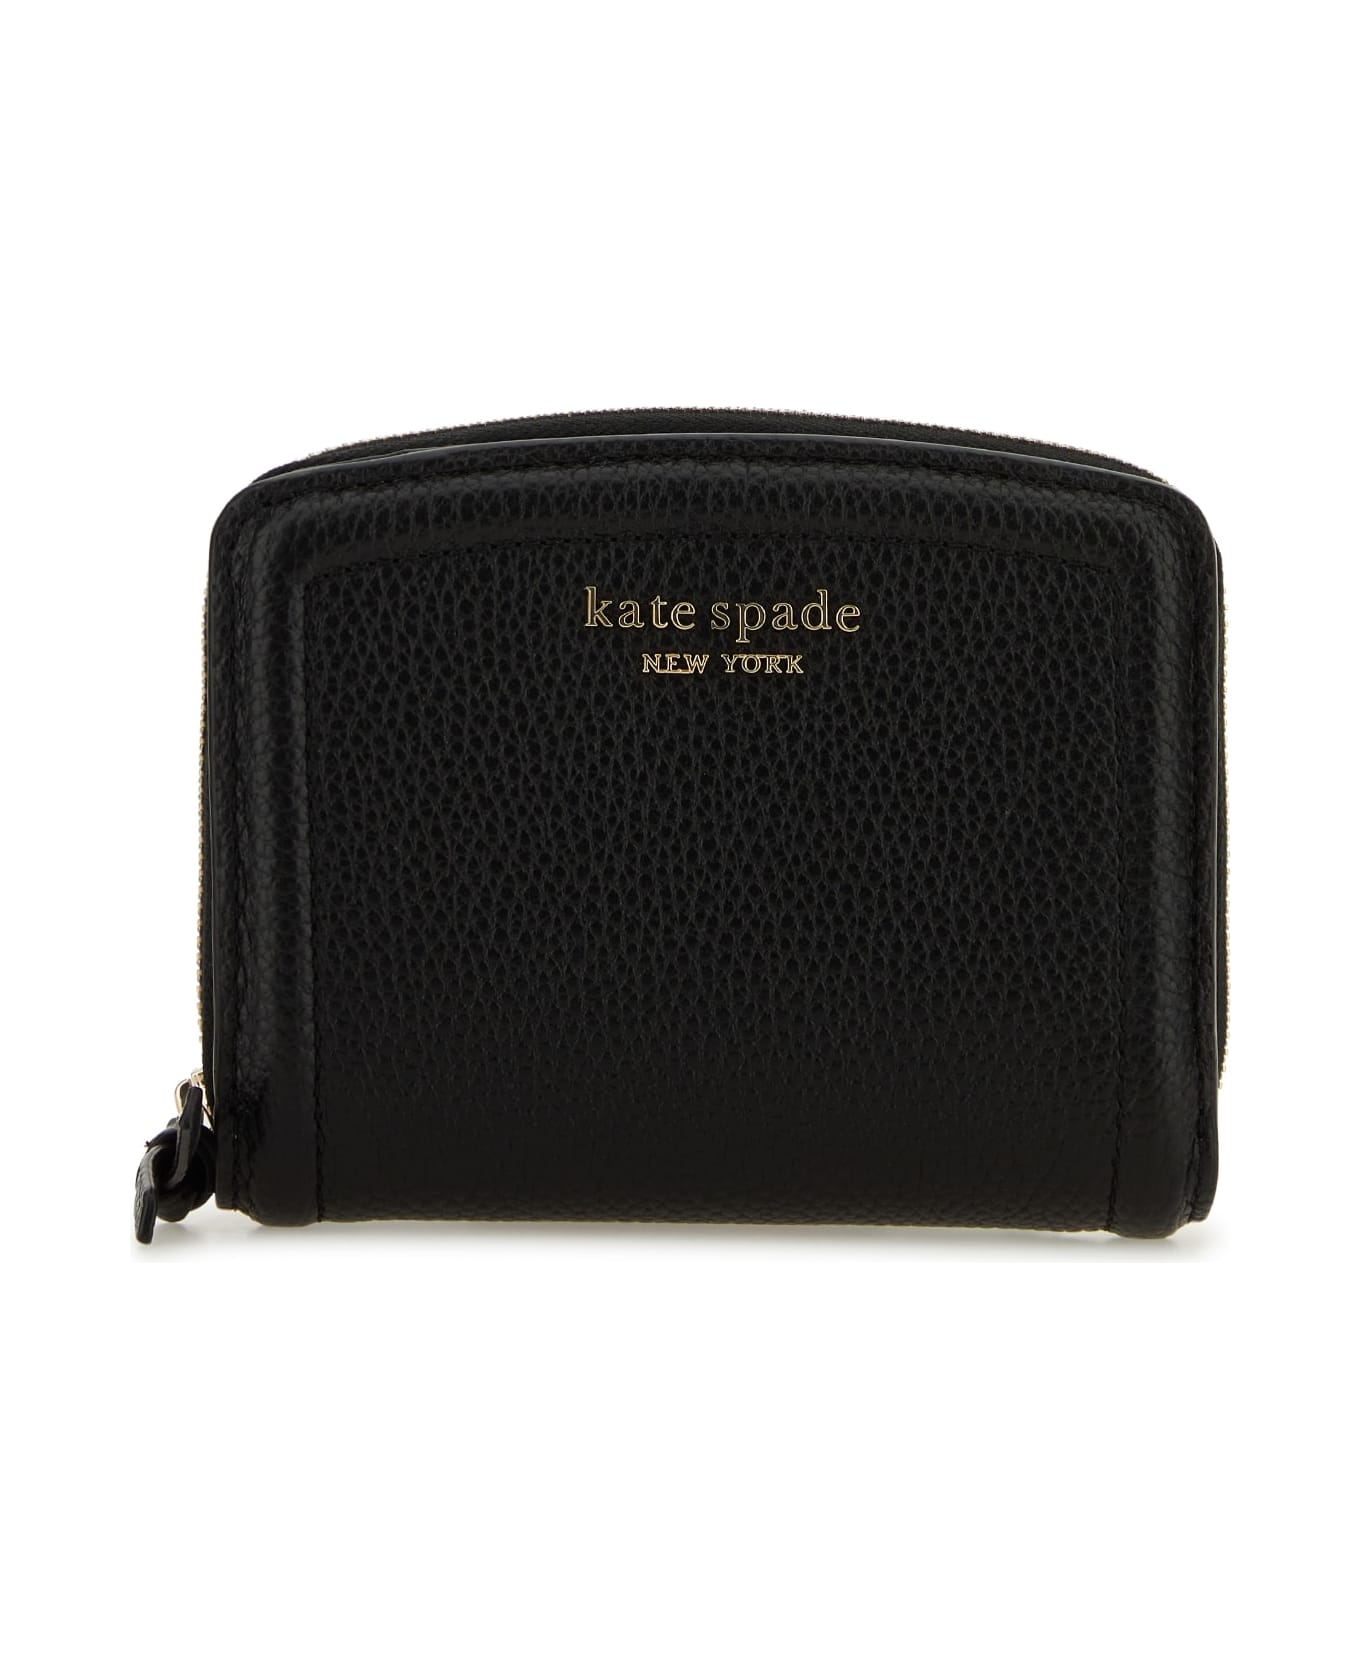 Kate Spade Portafoglio - 001 財布